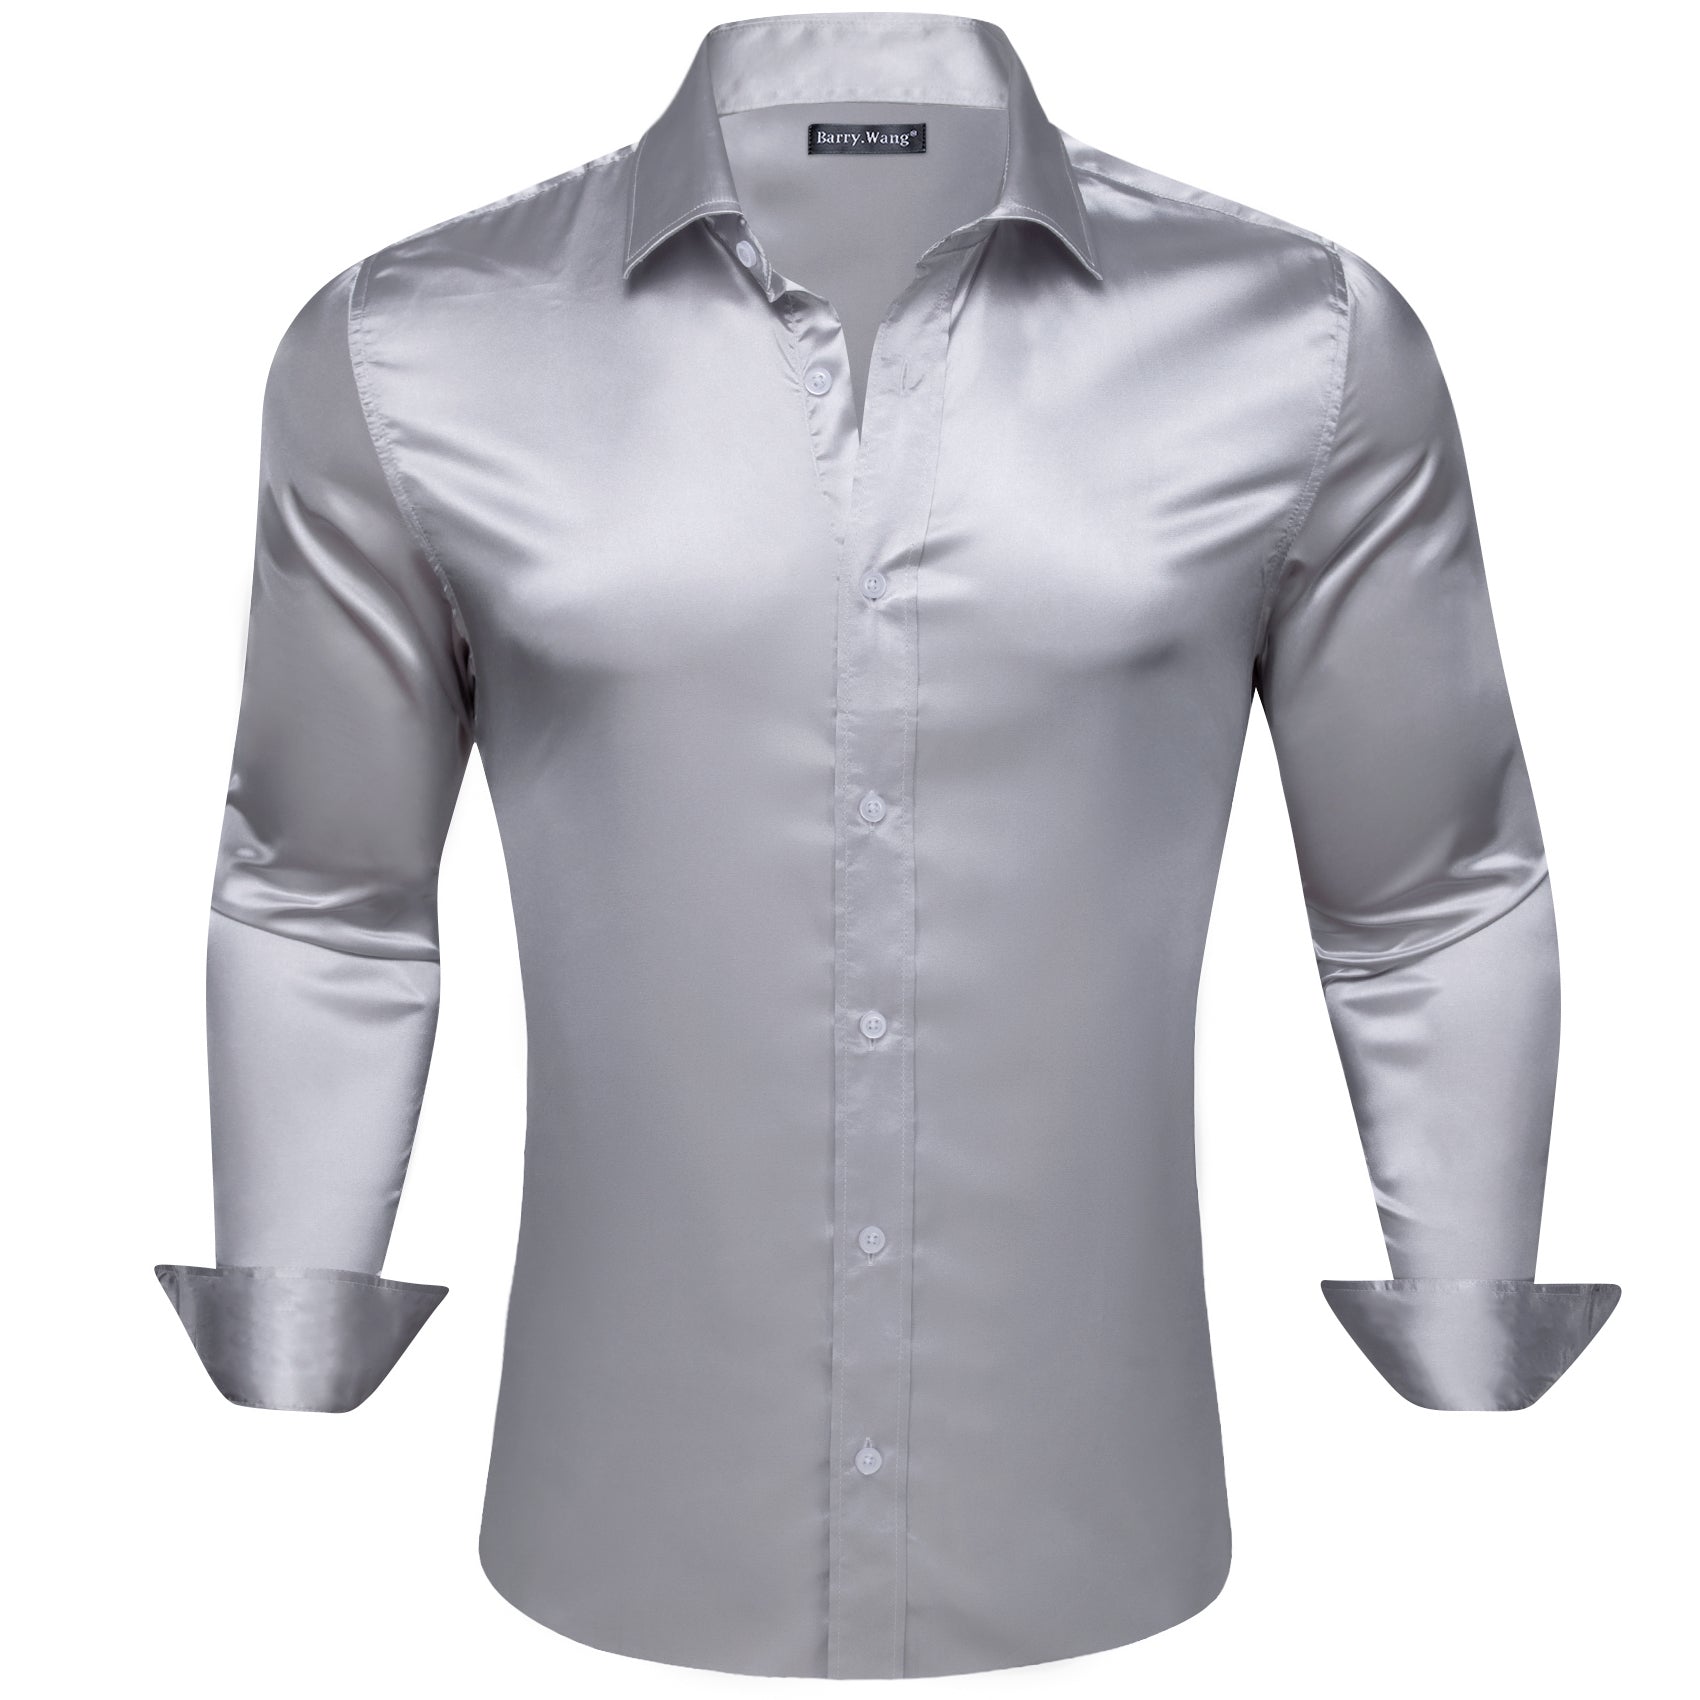 Barry.wang Grey Solid Silk Shirt